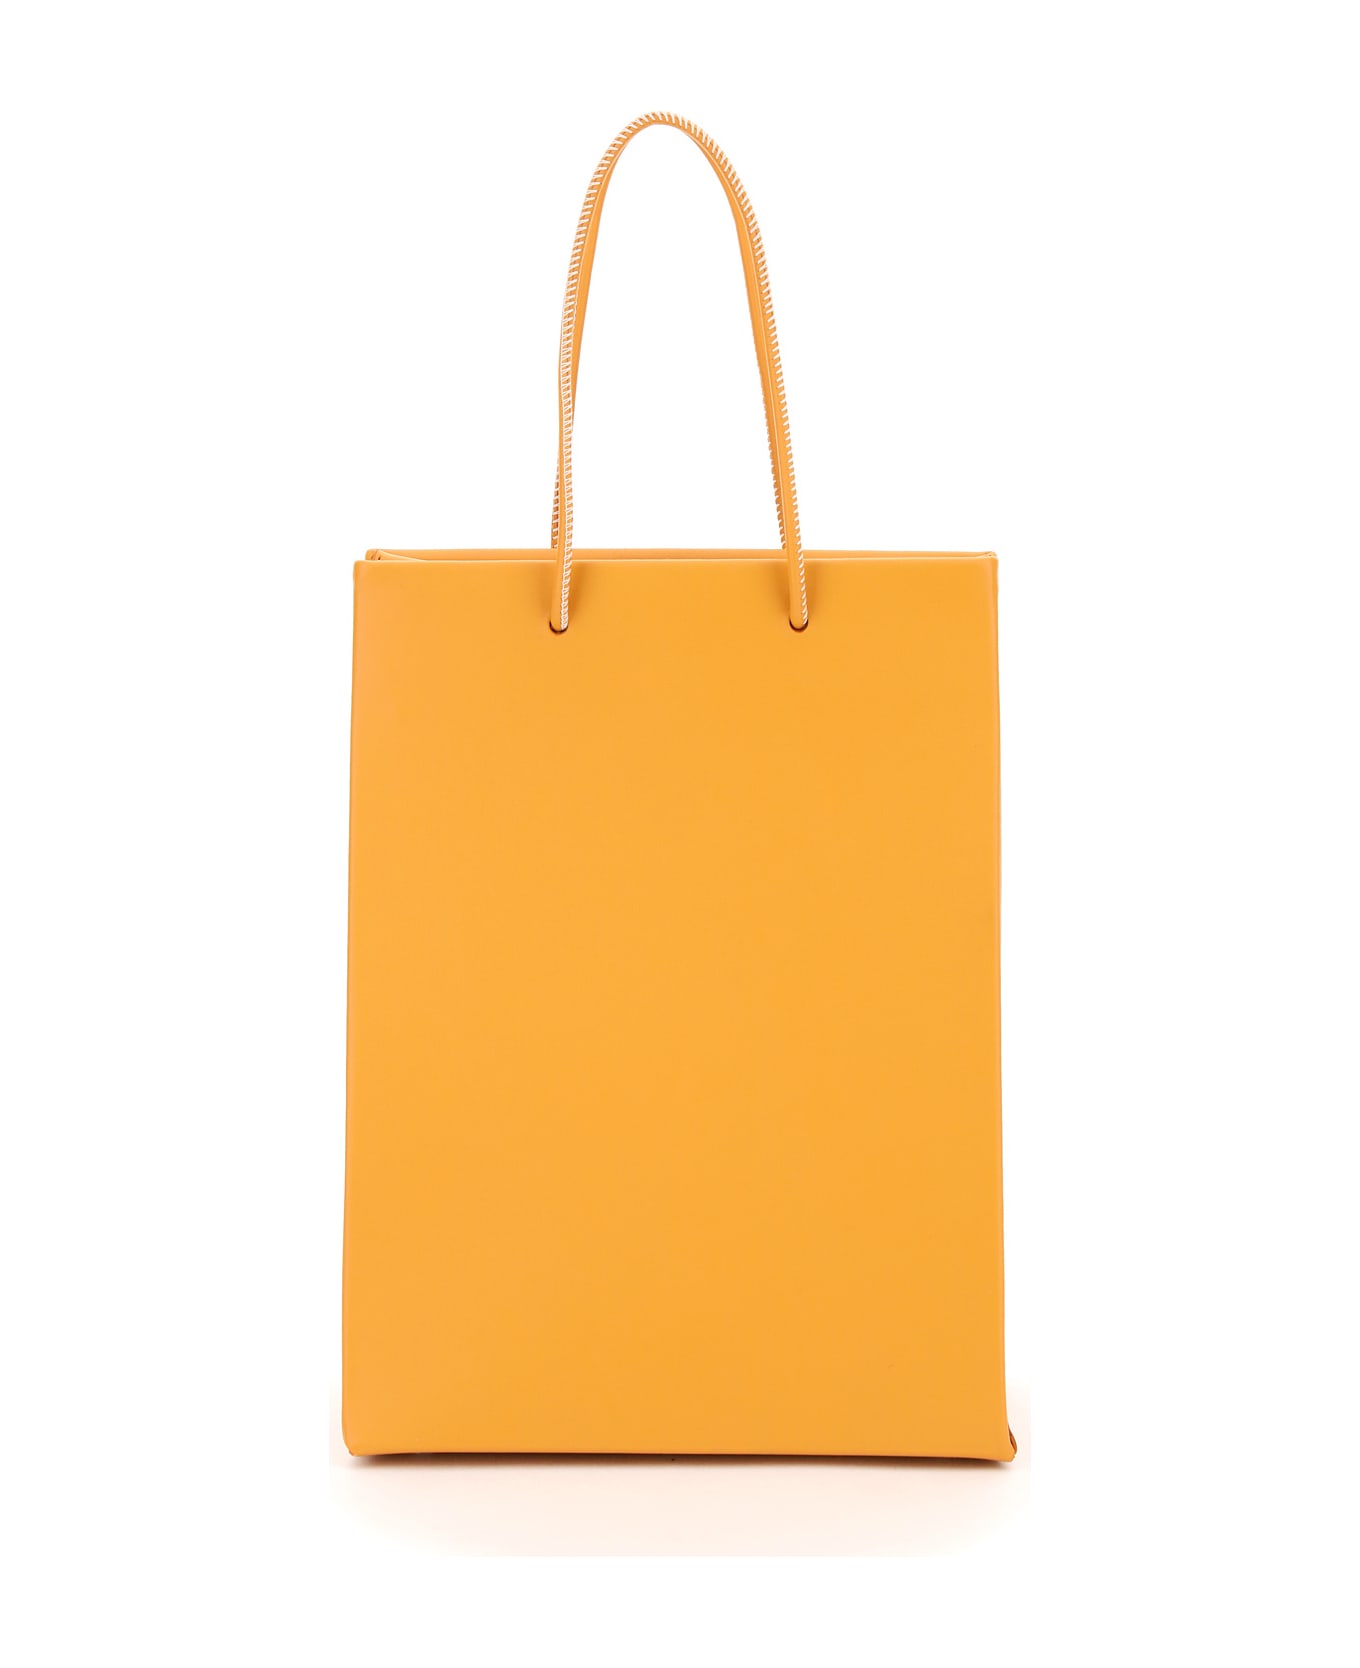 Medea Tall Prima Bag - TAN BROWN (Orange)